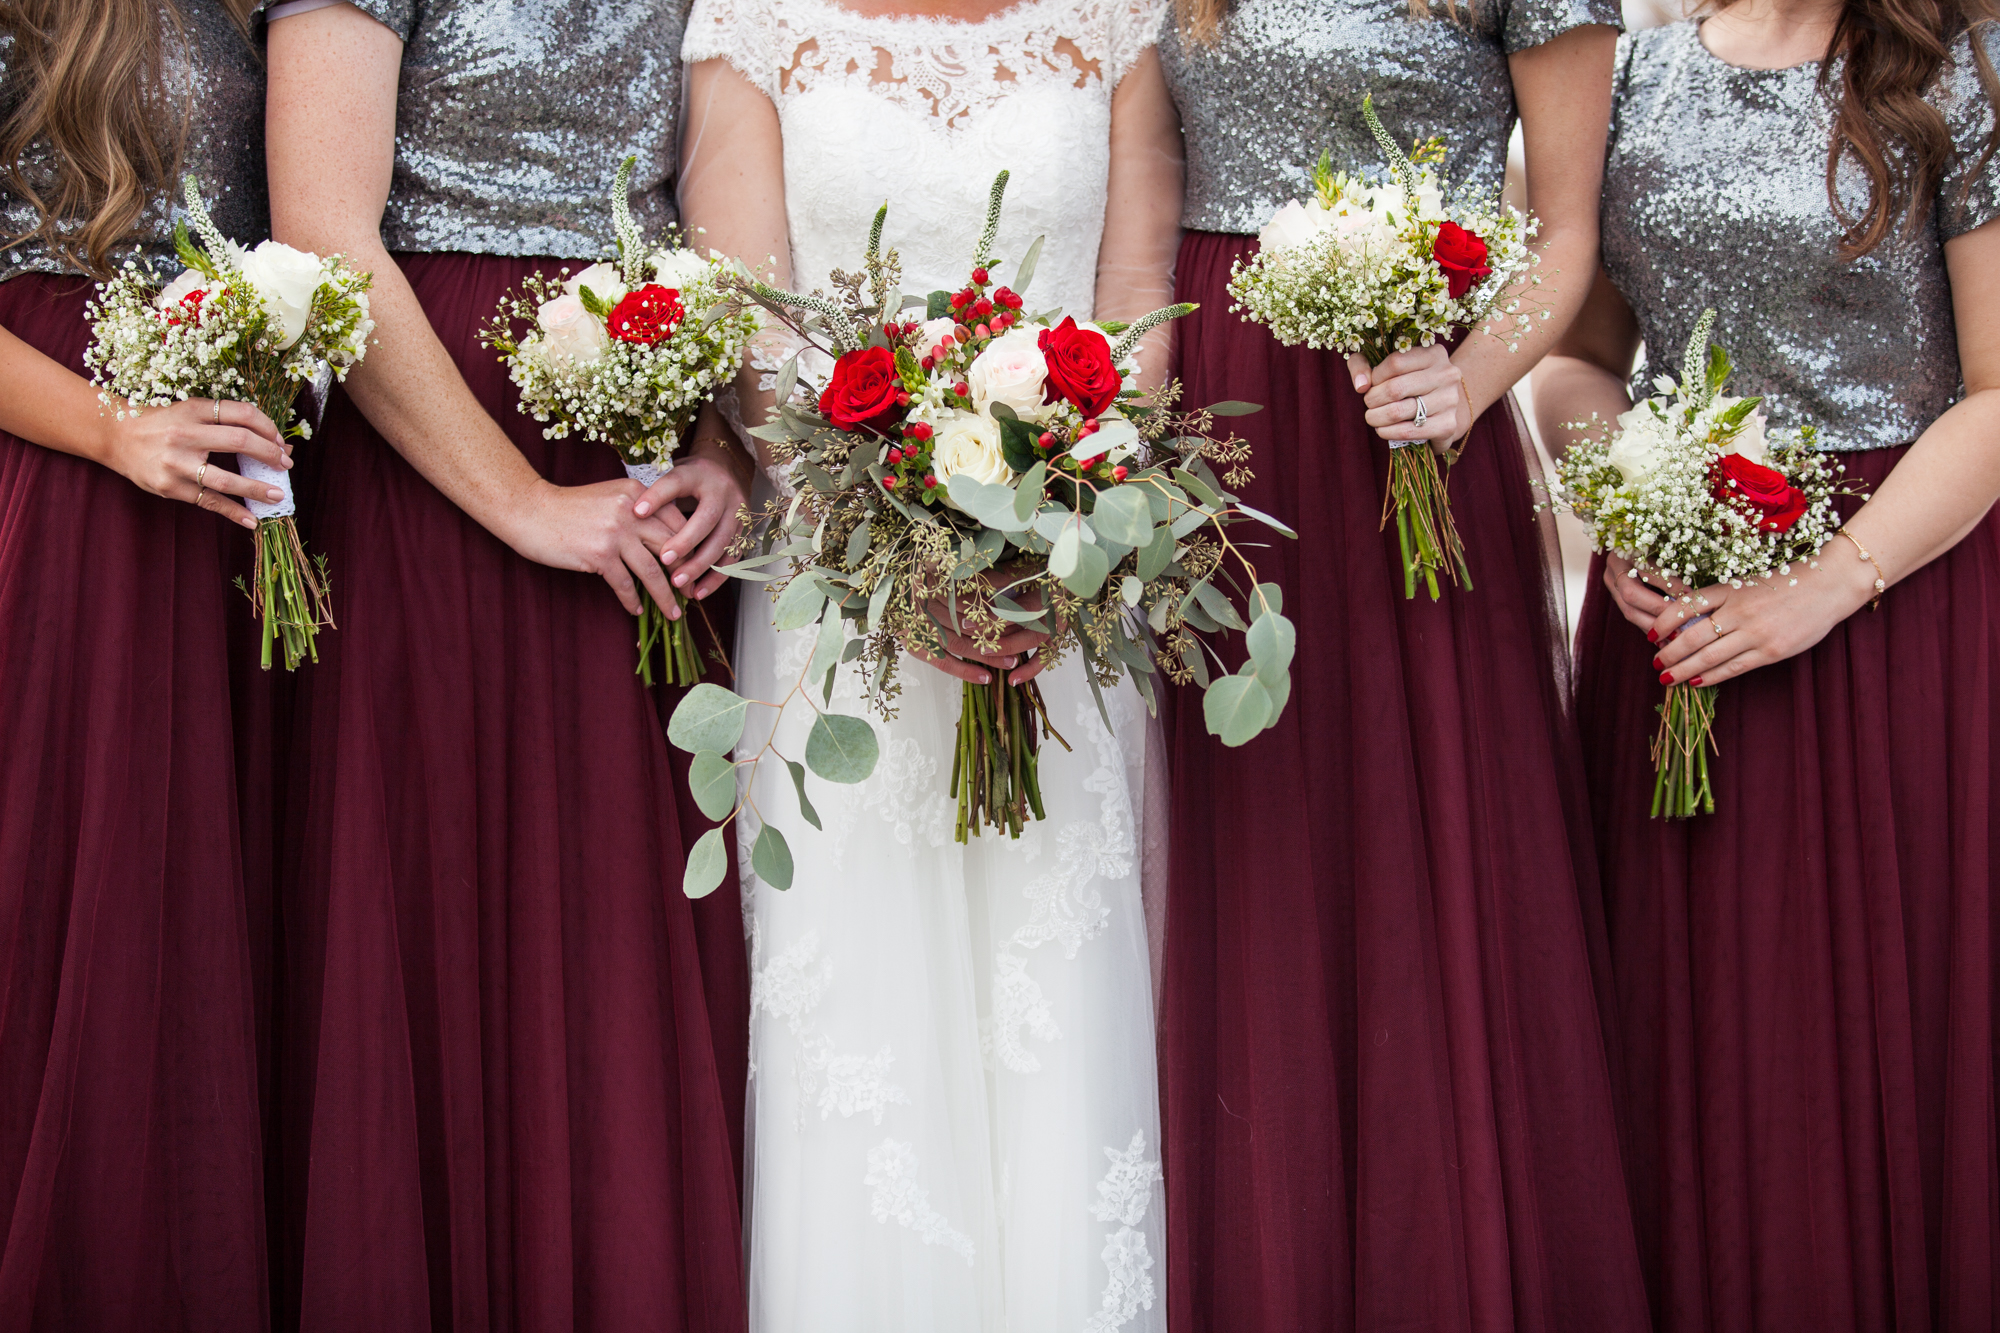 maroon and sequins bridesmaids dresses for winter wedding ideas, durango colorado winter wedding inspiration